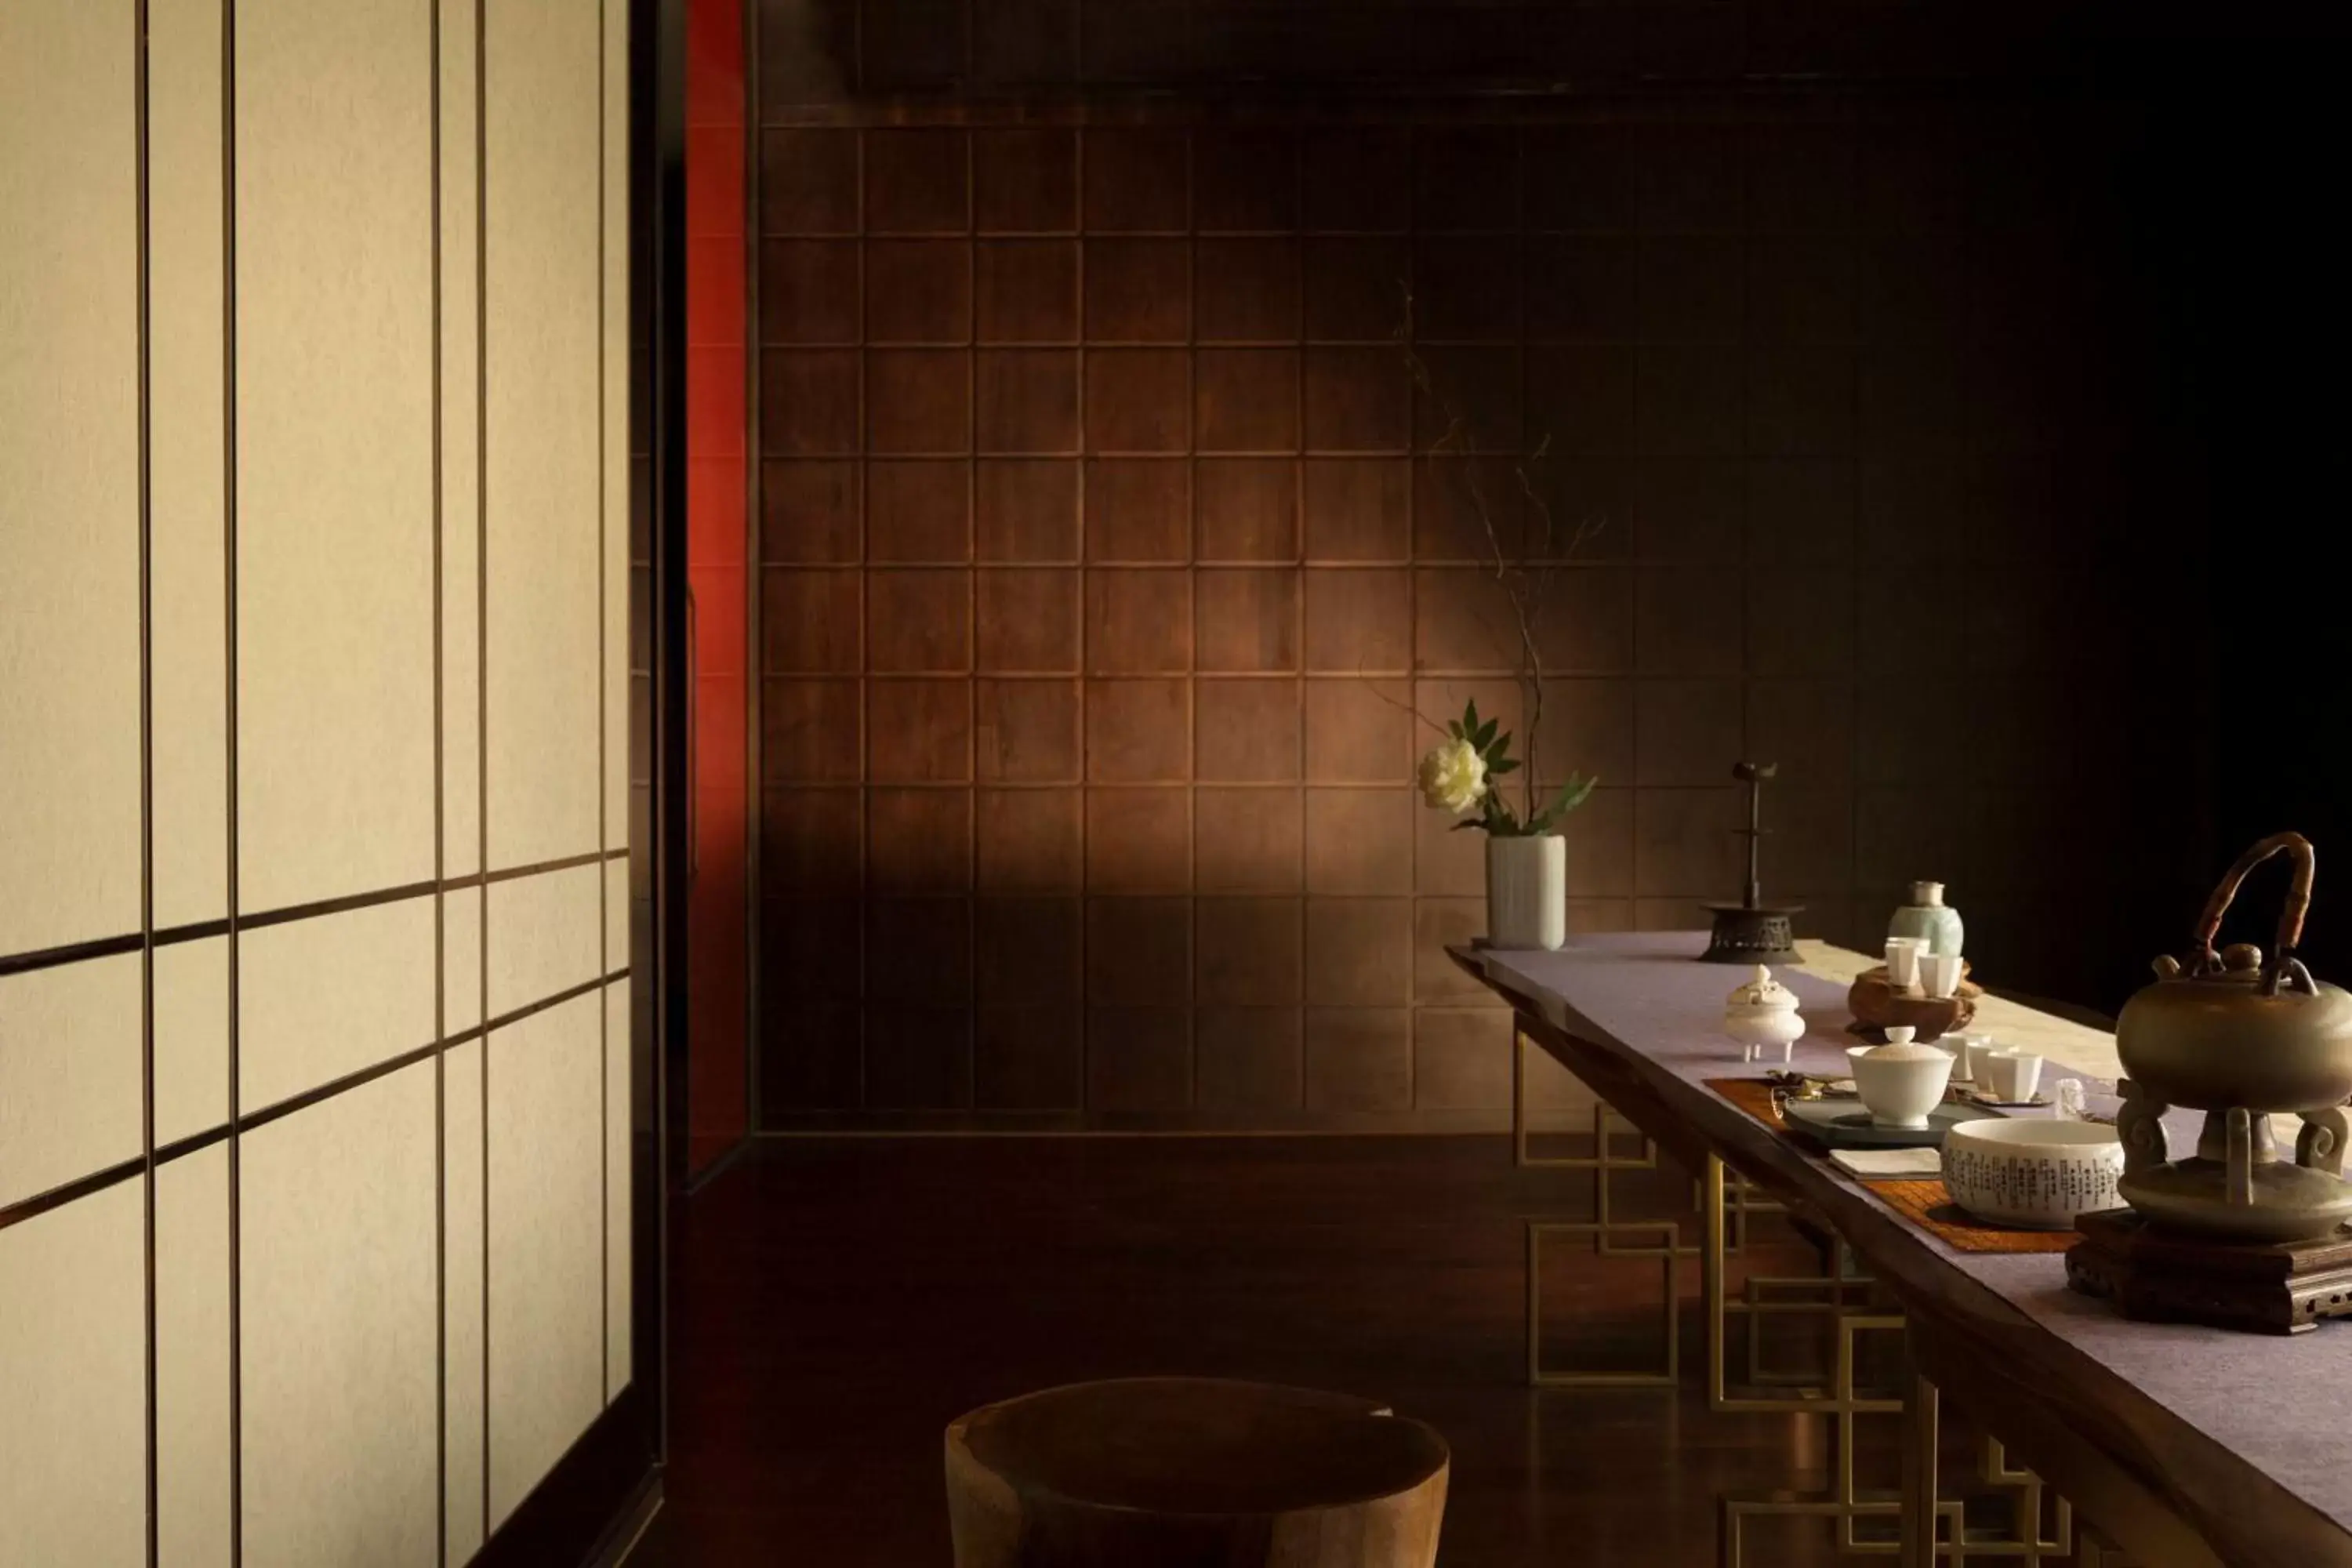 Restaurant/places to eat in Kempinski Hotel Fuzhou